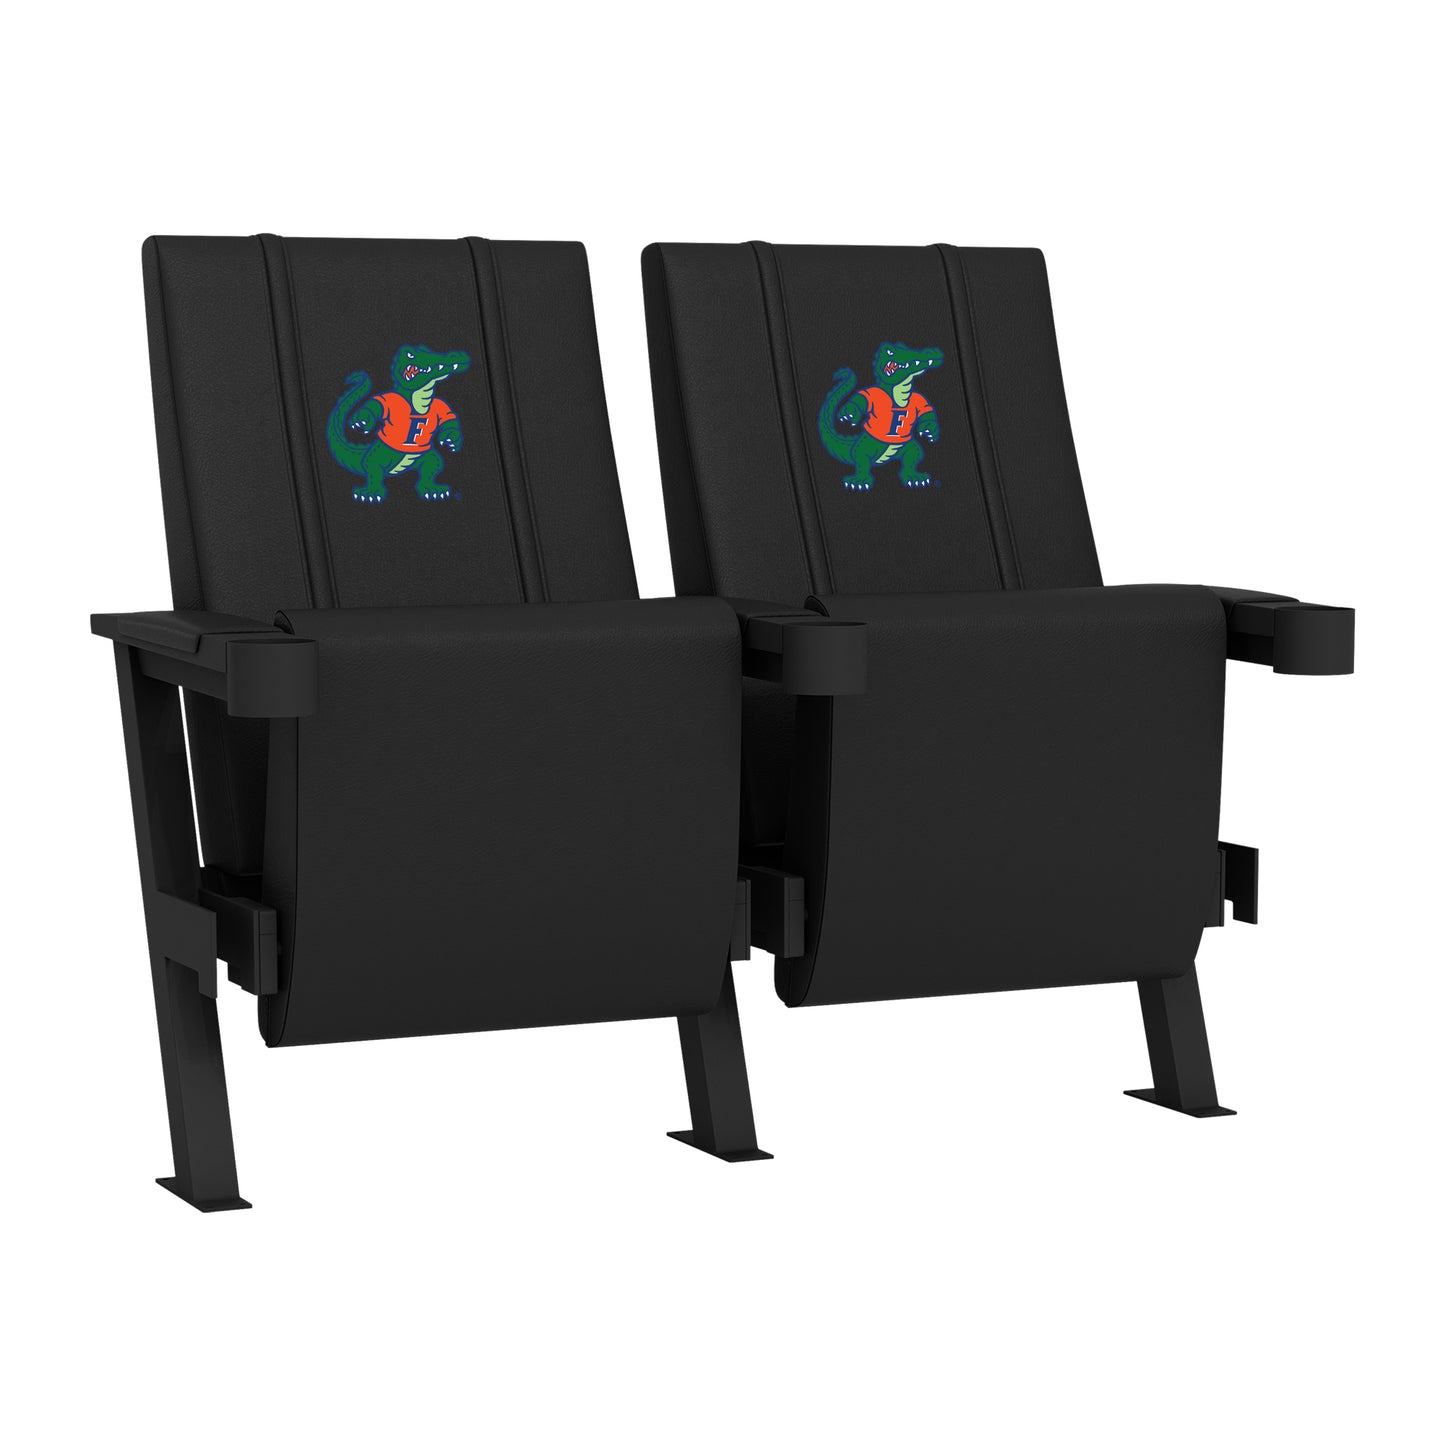 SuiteMax 3.5 VIP Seats with University of Florida Alternate Logo